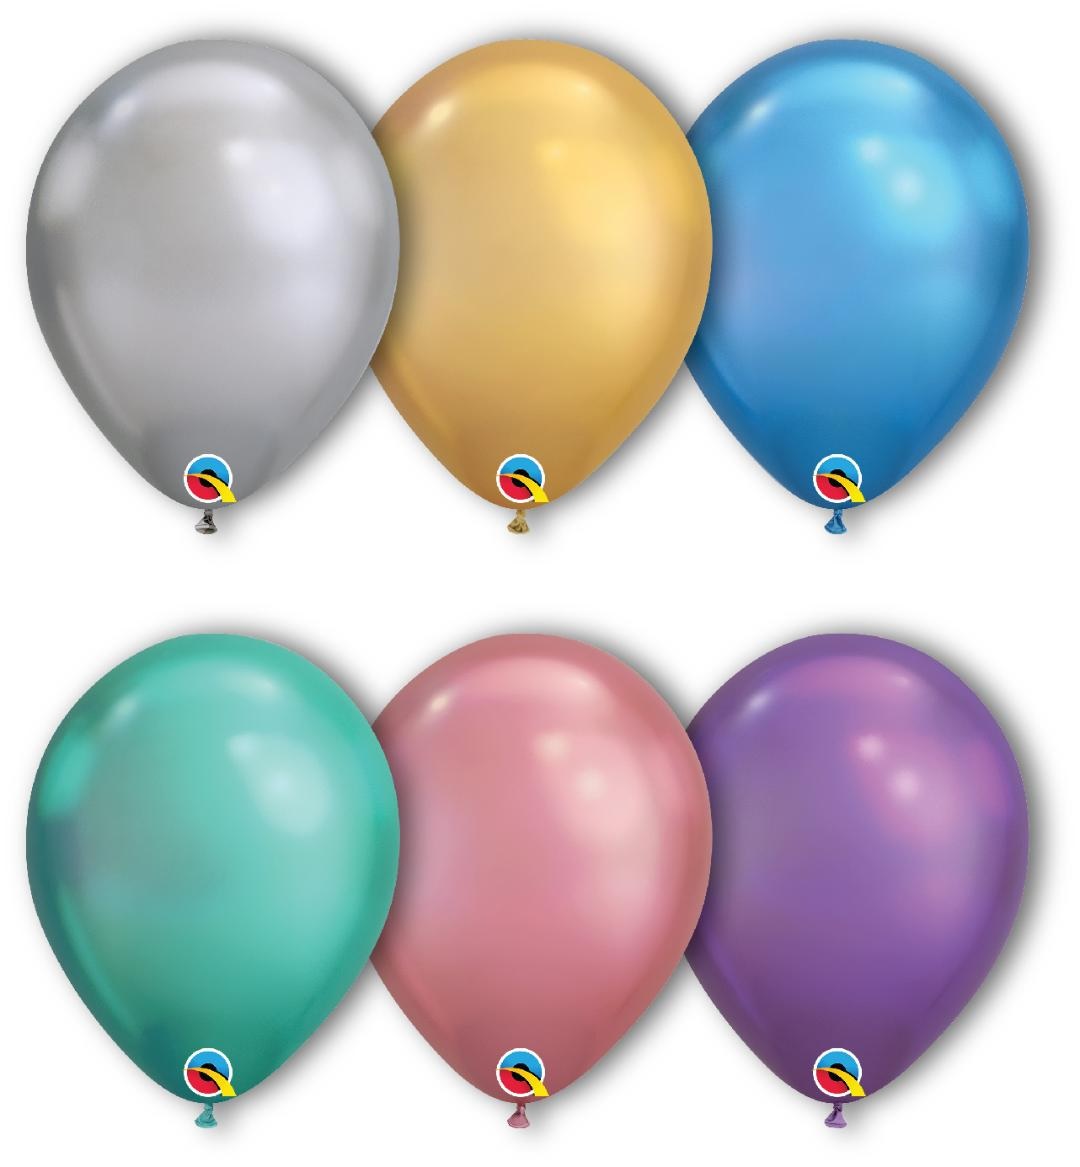 Okkernoot Kracht Naar boven 11" Chrome Assorted 100 Count Qualatex Latex Balloons | Bargain Balloons -  Mylar Balloons and Foil Balloons